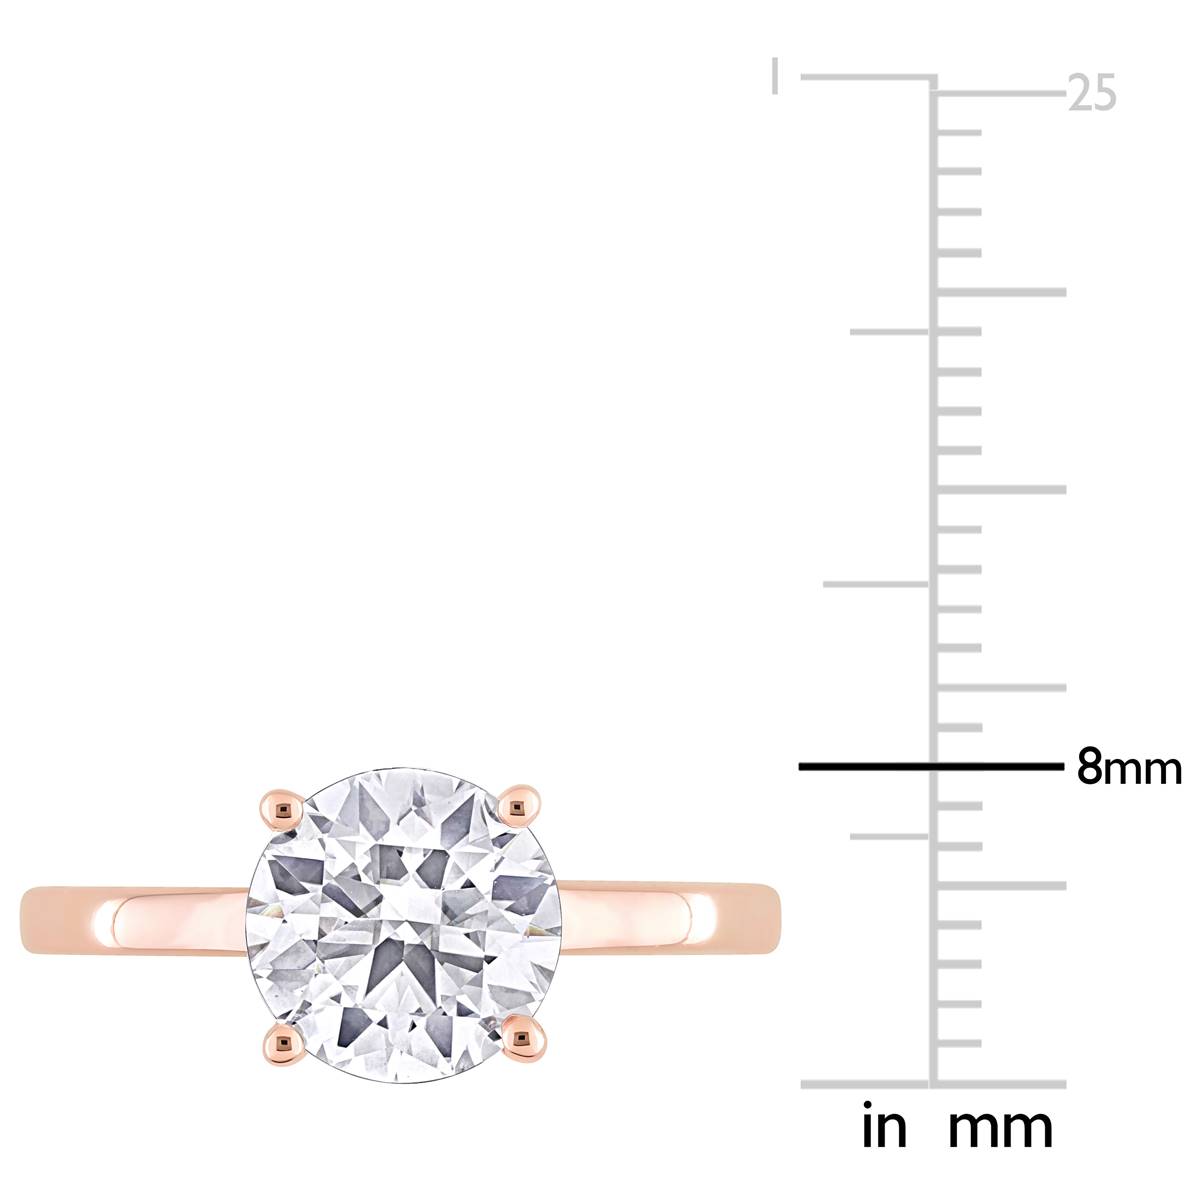 Gemstone Classics(tm) 10kt. Rose Gold Lab Created Sapphire Ring